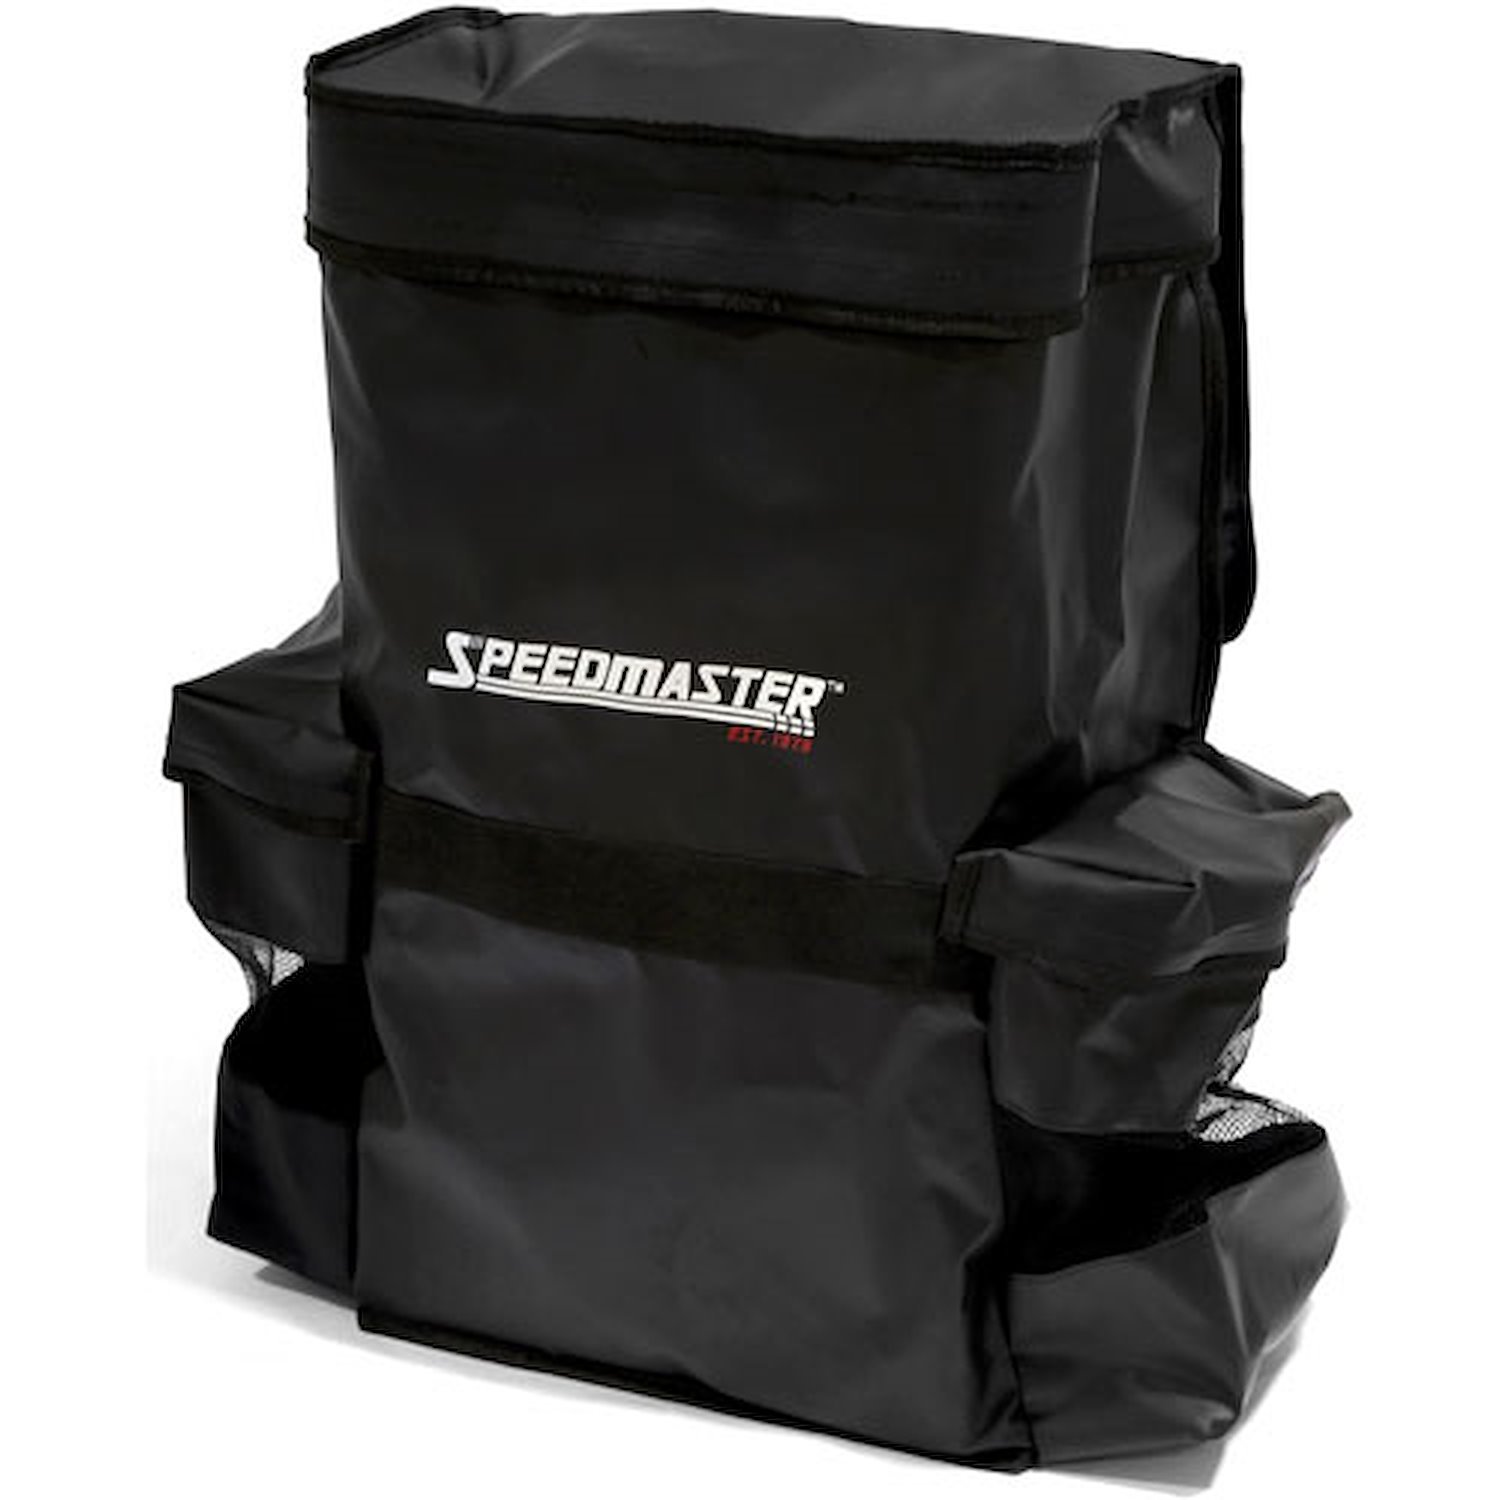 Large Capacity Storage Bag With Side Pockets 1680 Denier, PVC Backed Nylon Uses: